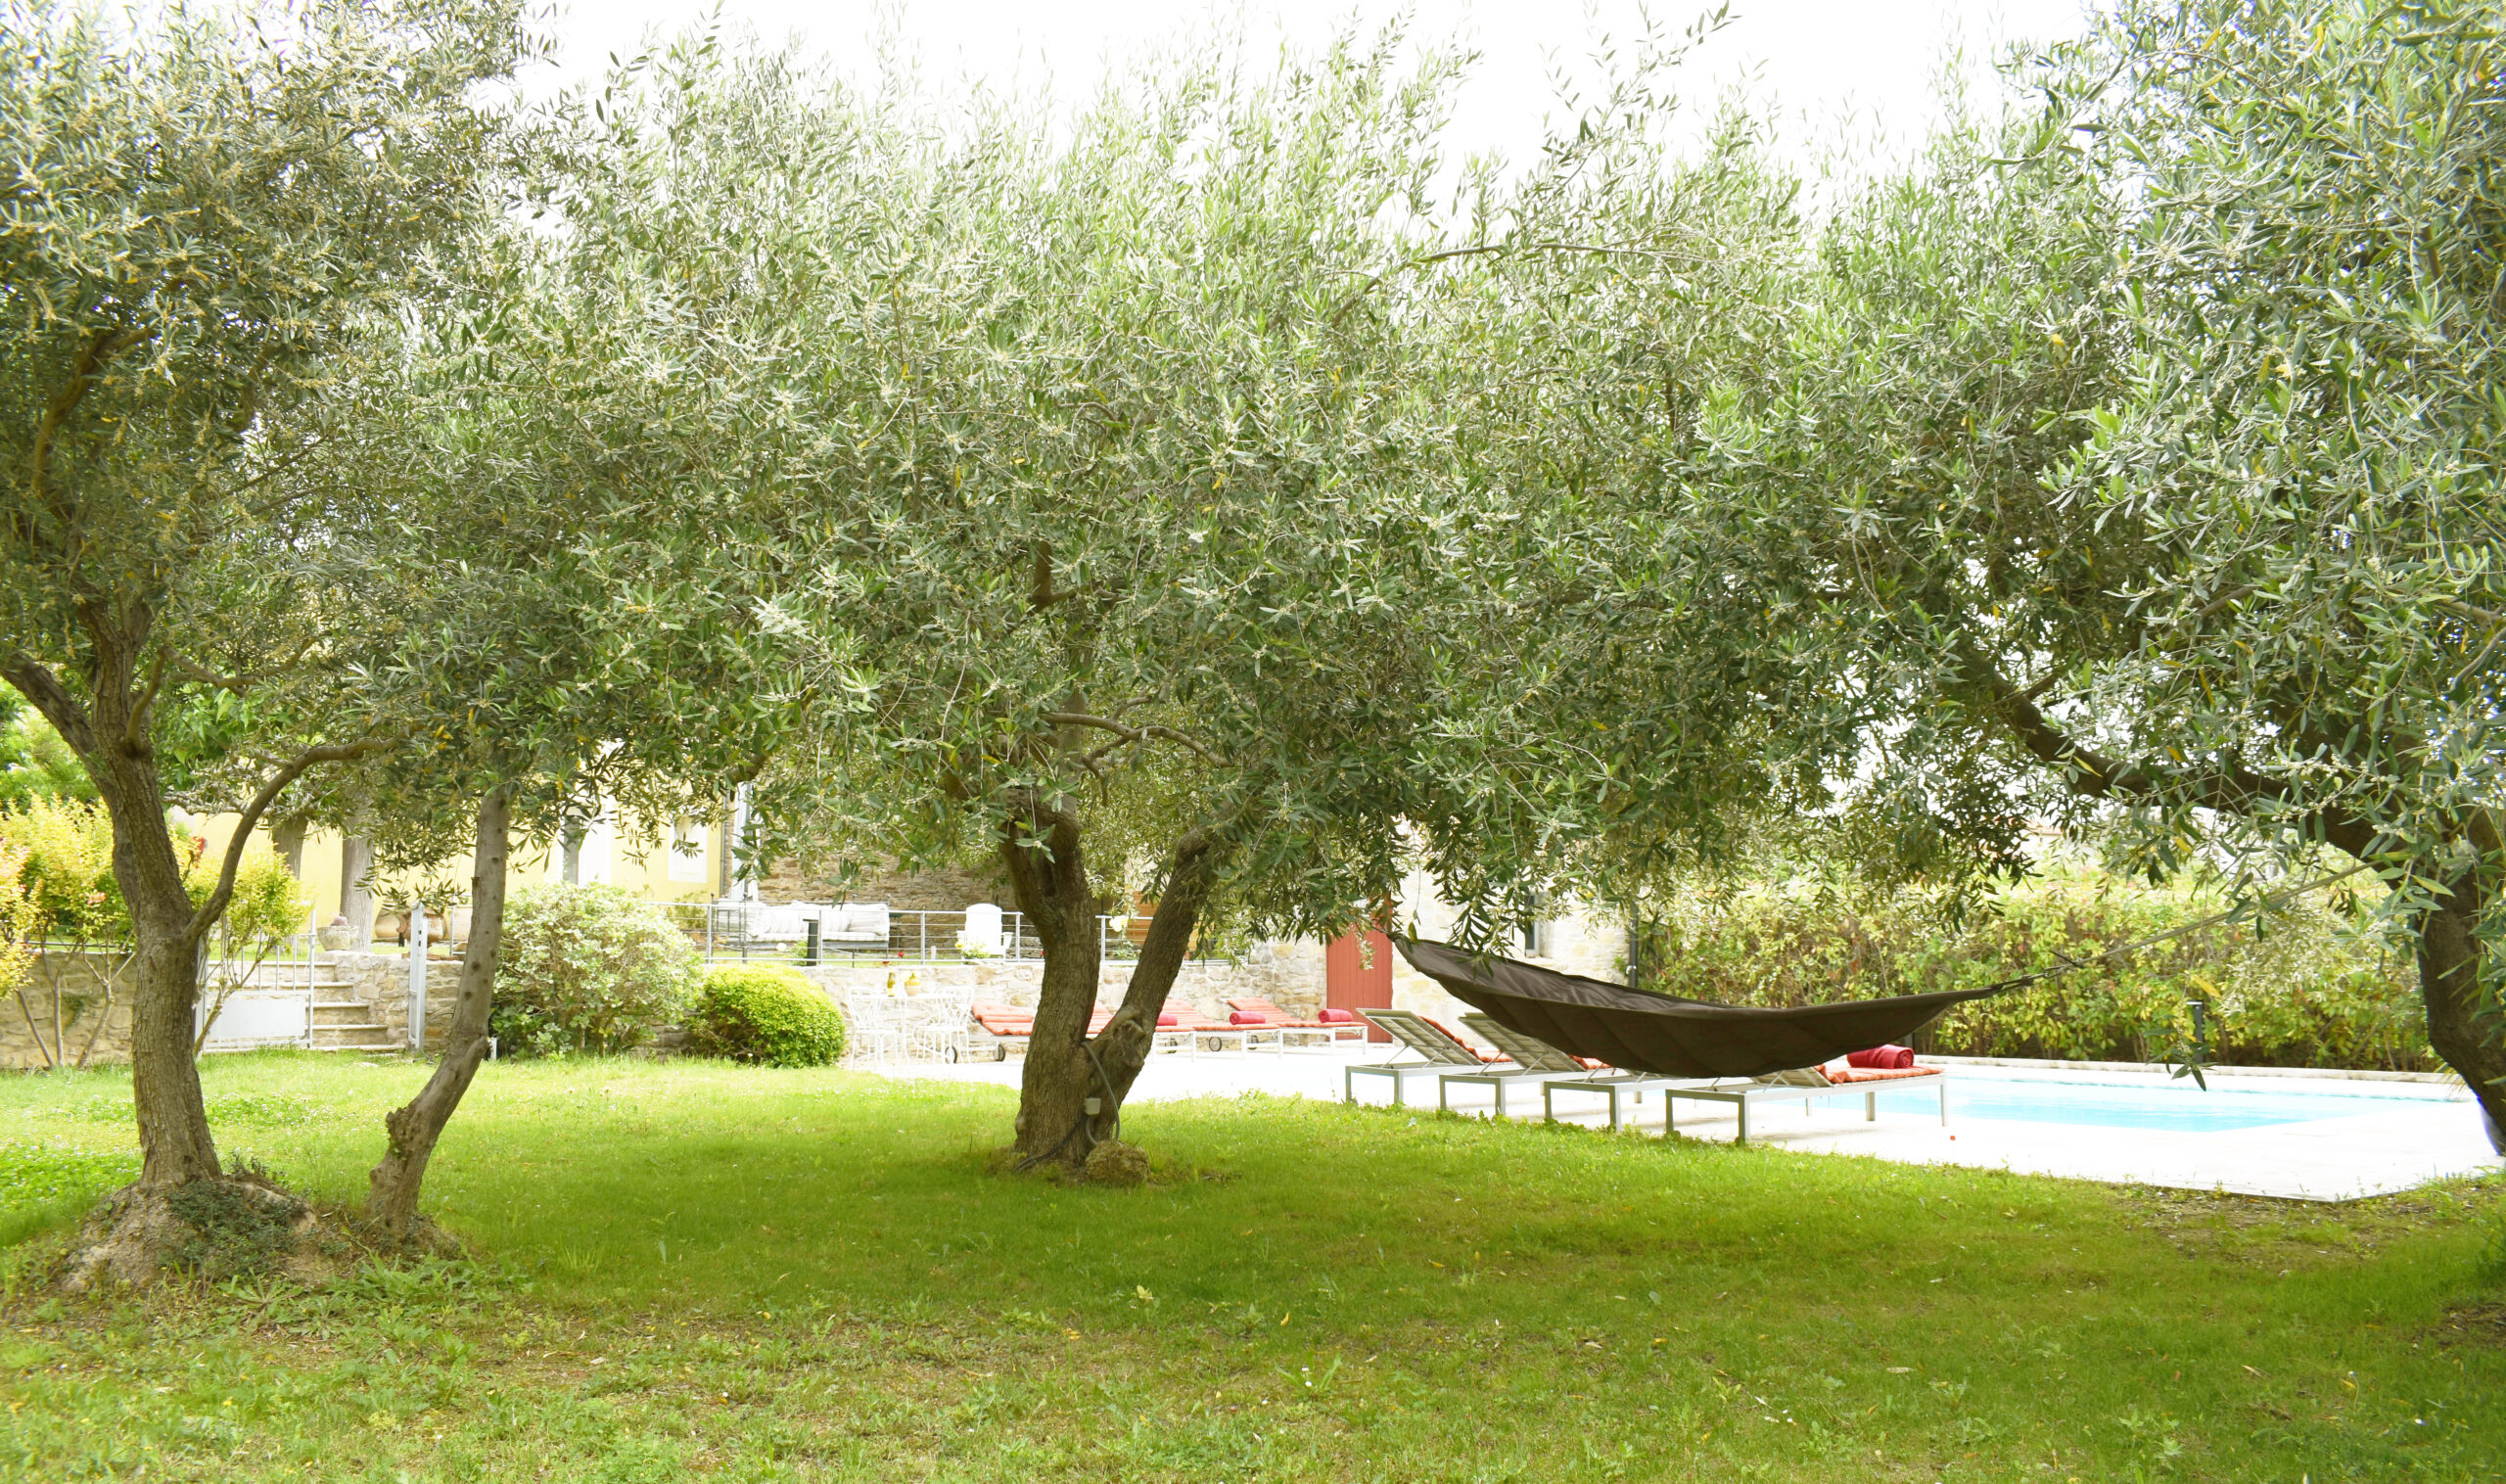 Hammock under the olive trees